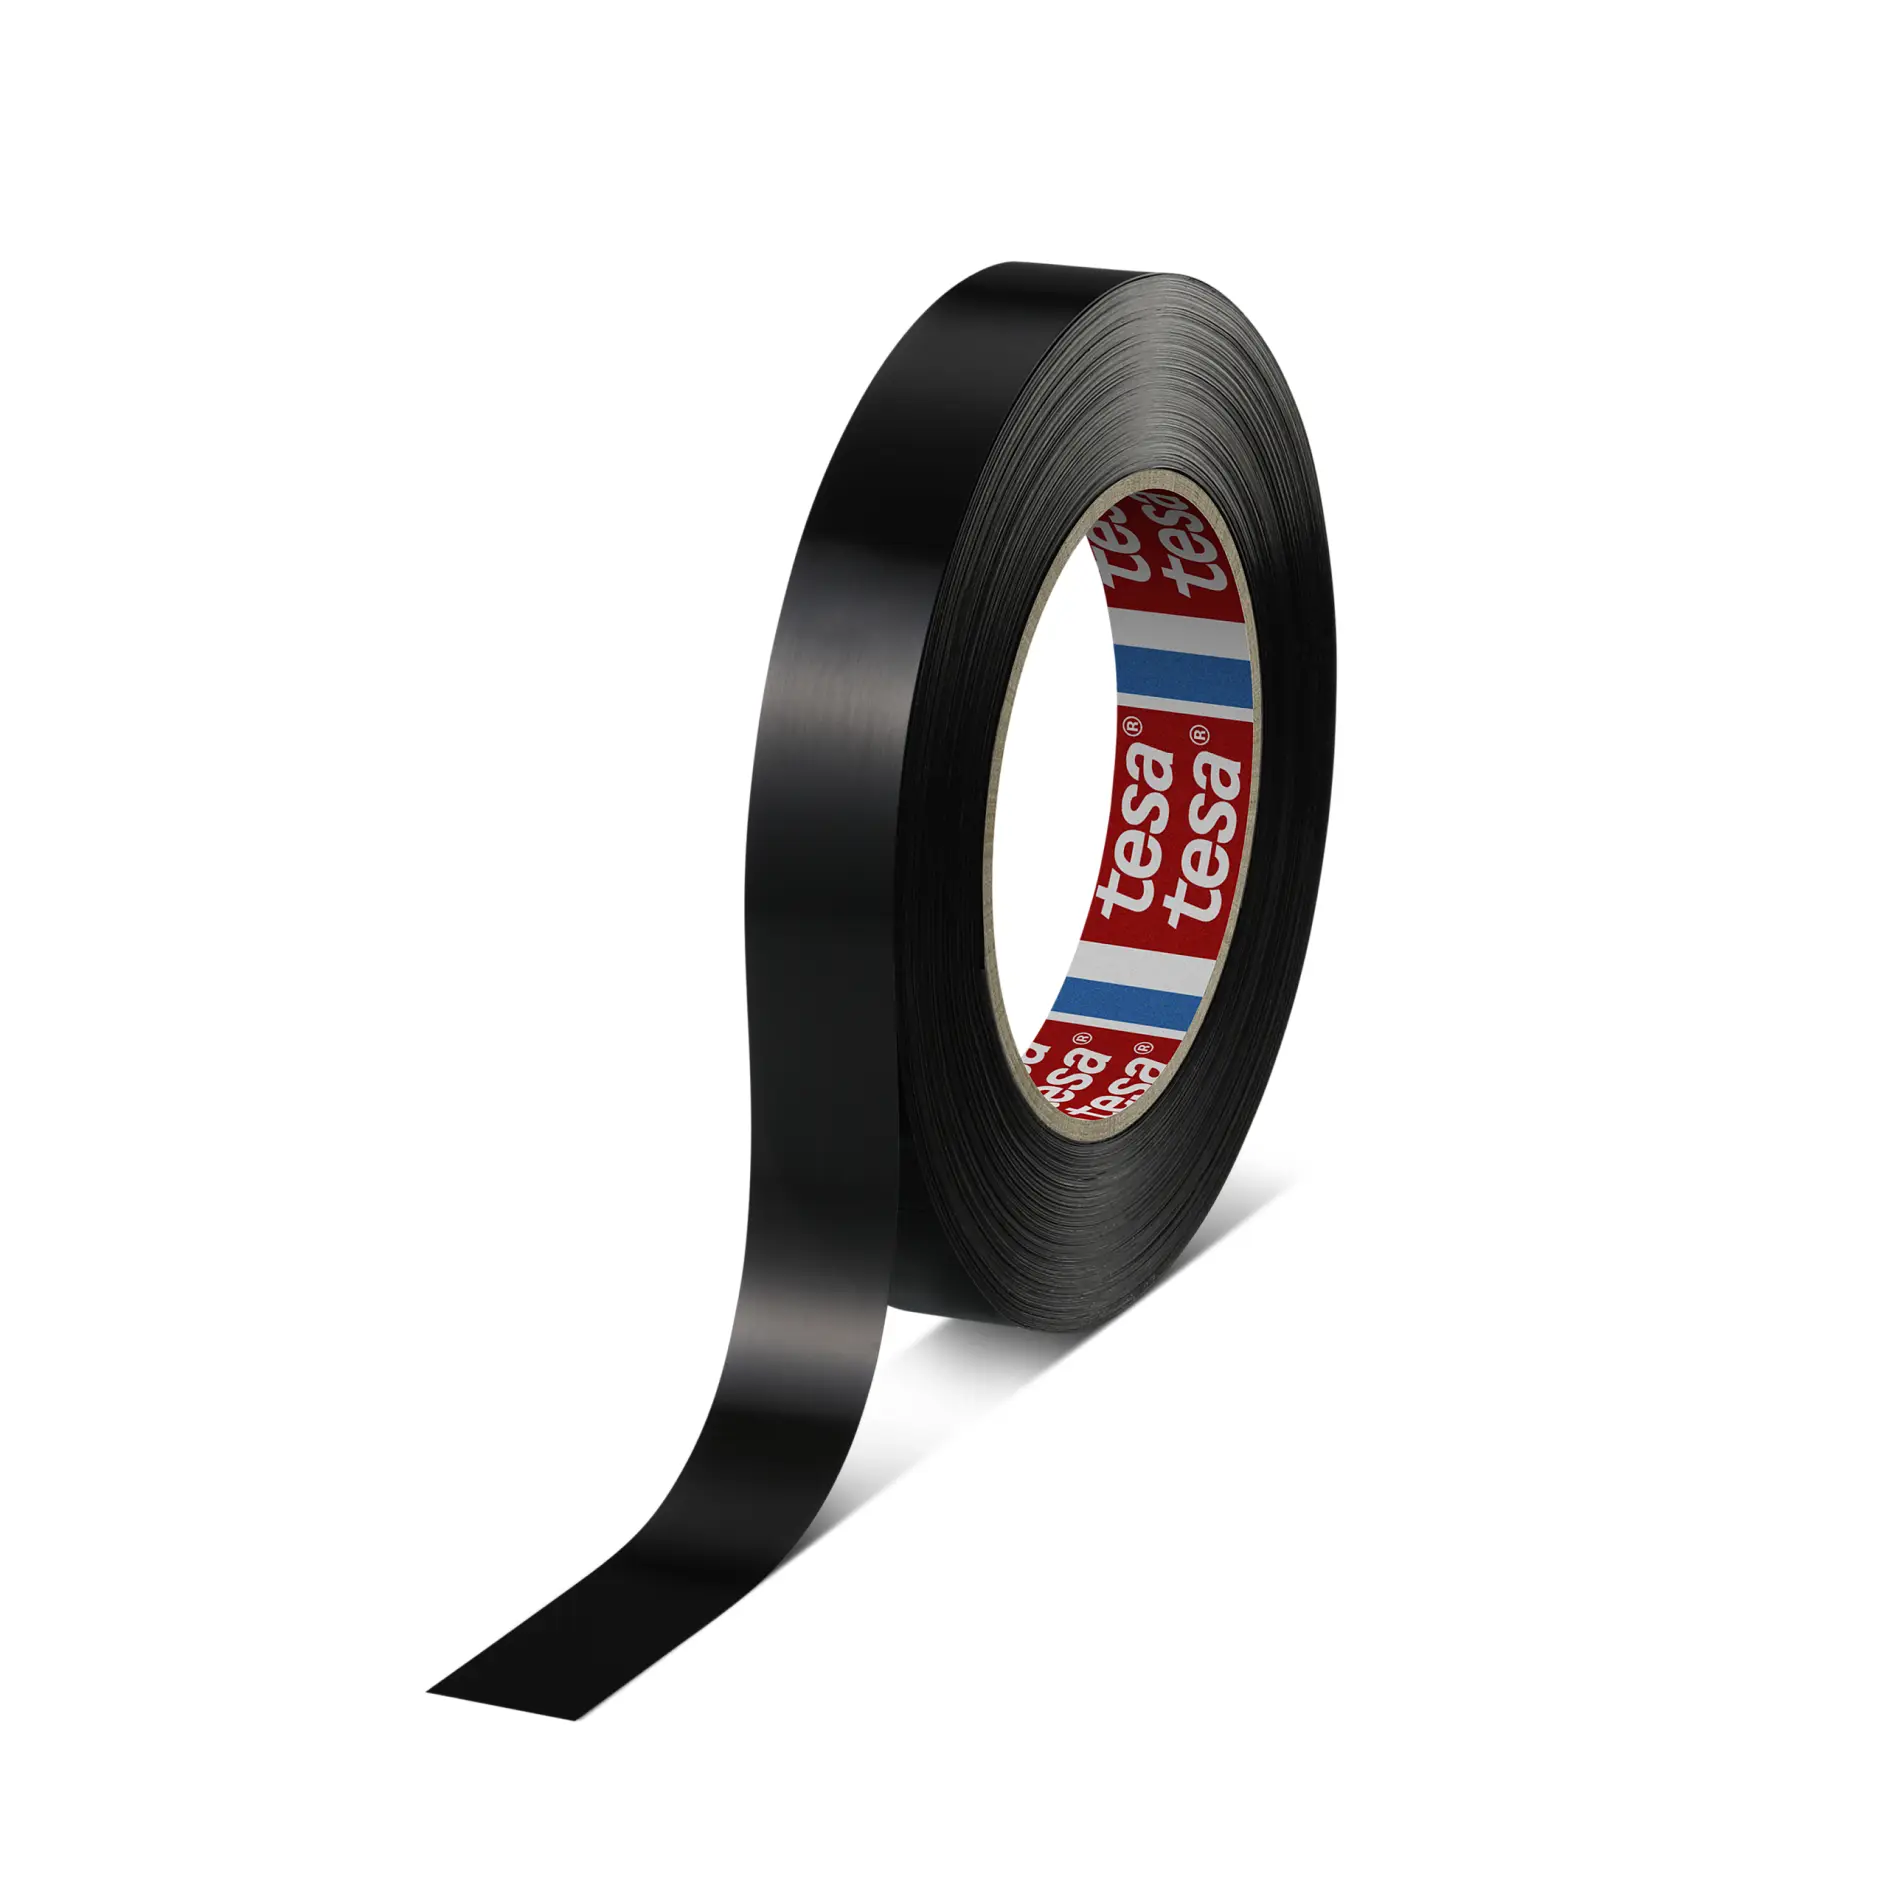 tesa-4288-medium-duty-tensilised-strapping-tape-black-042880007800-pr